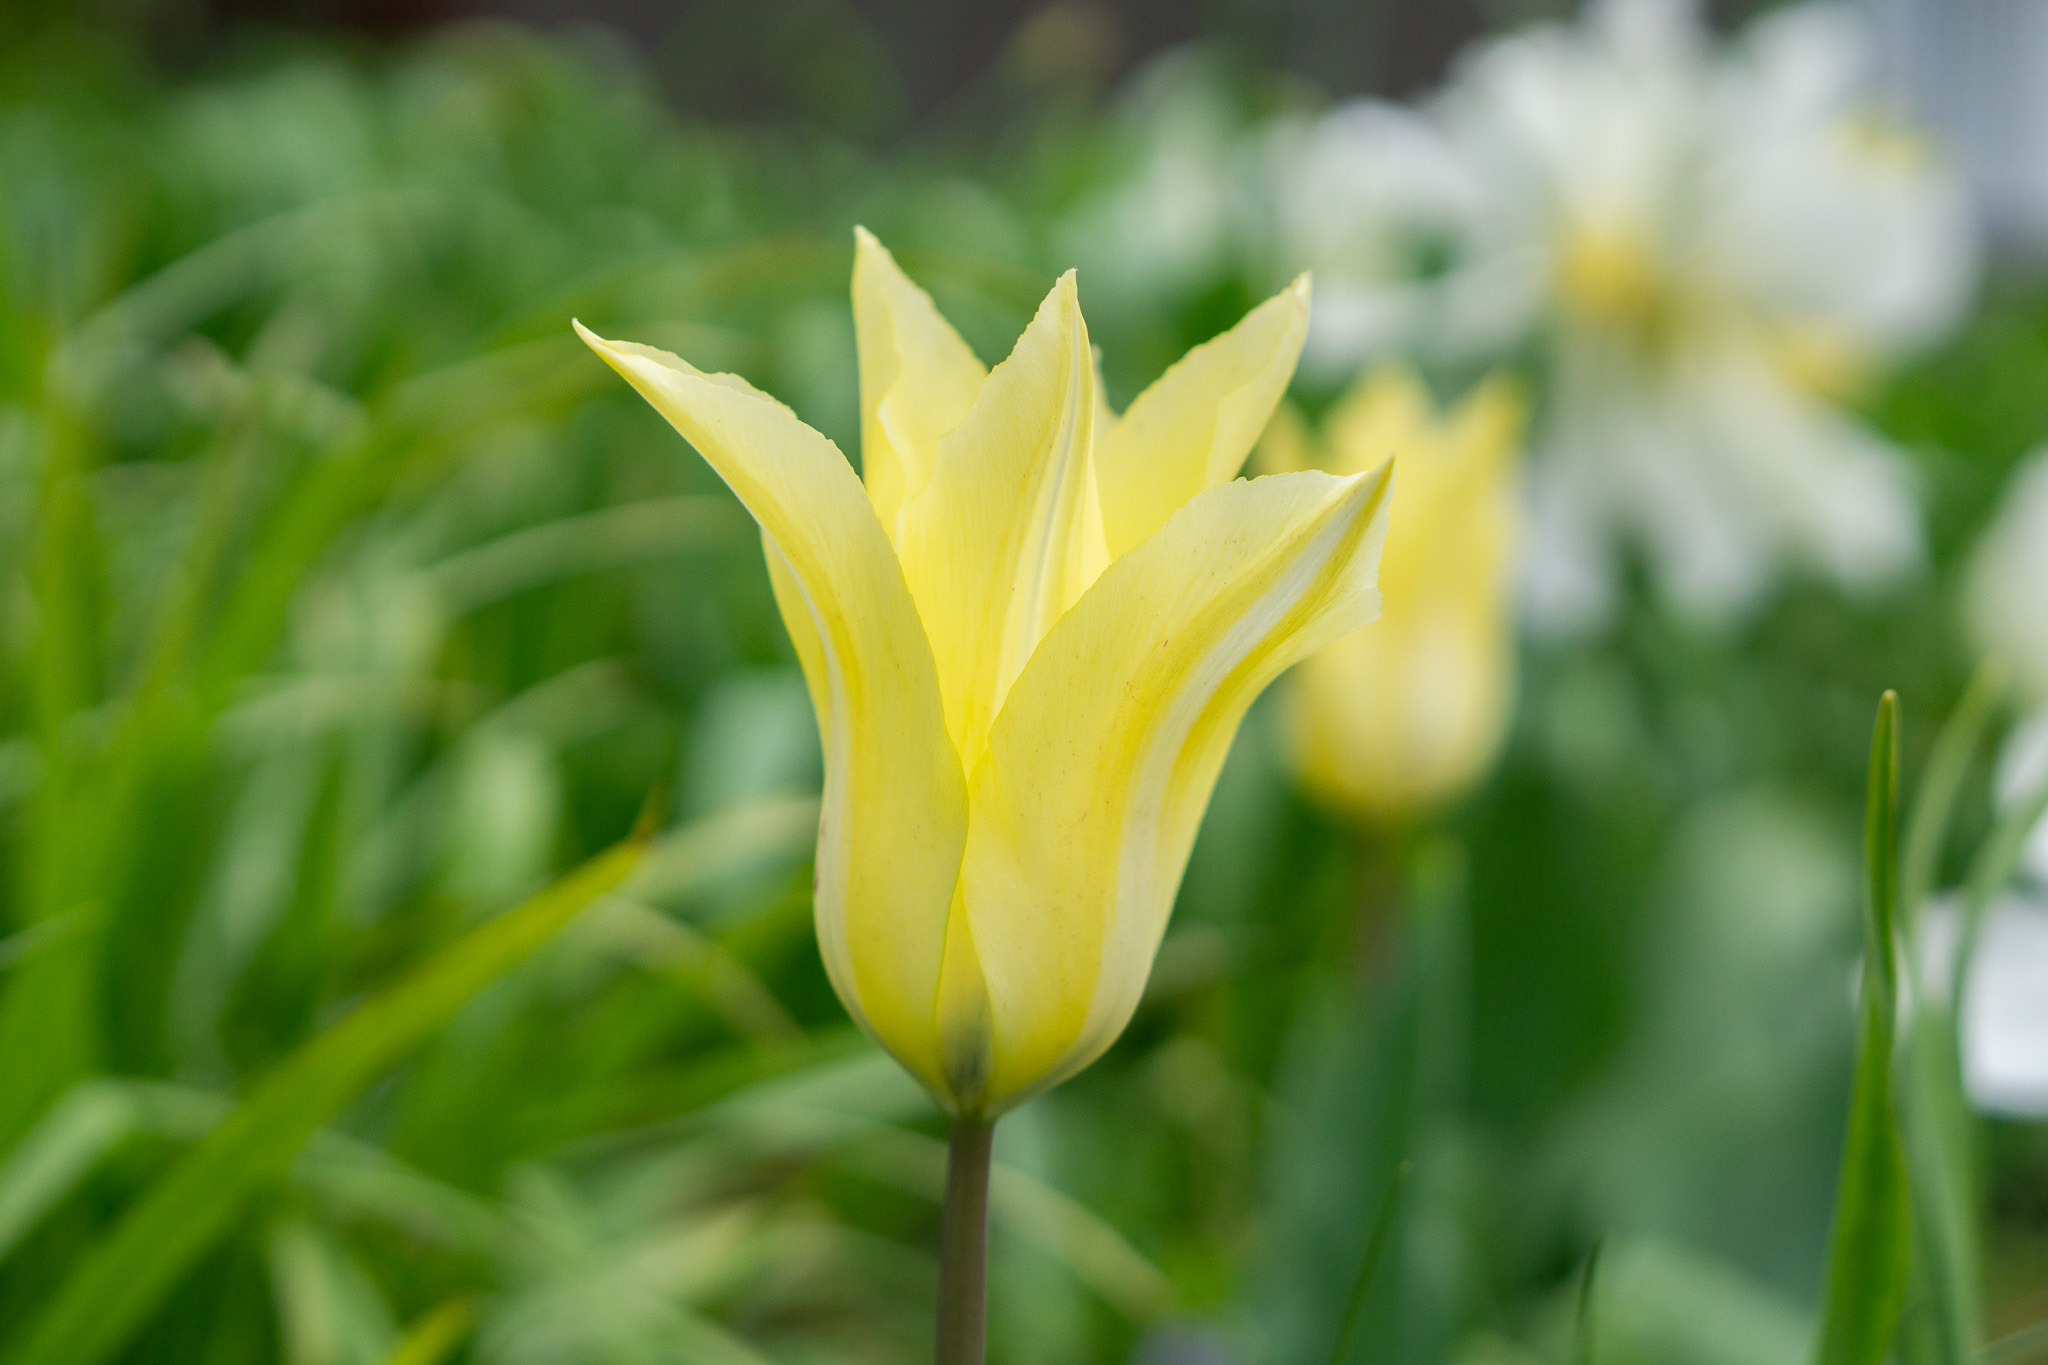 A Cairo tulip